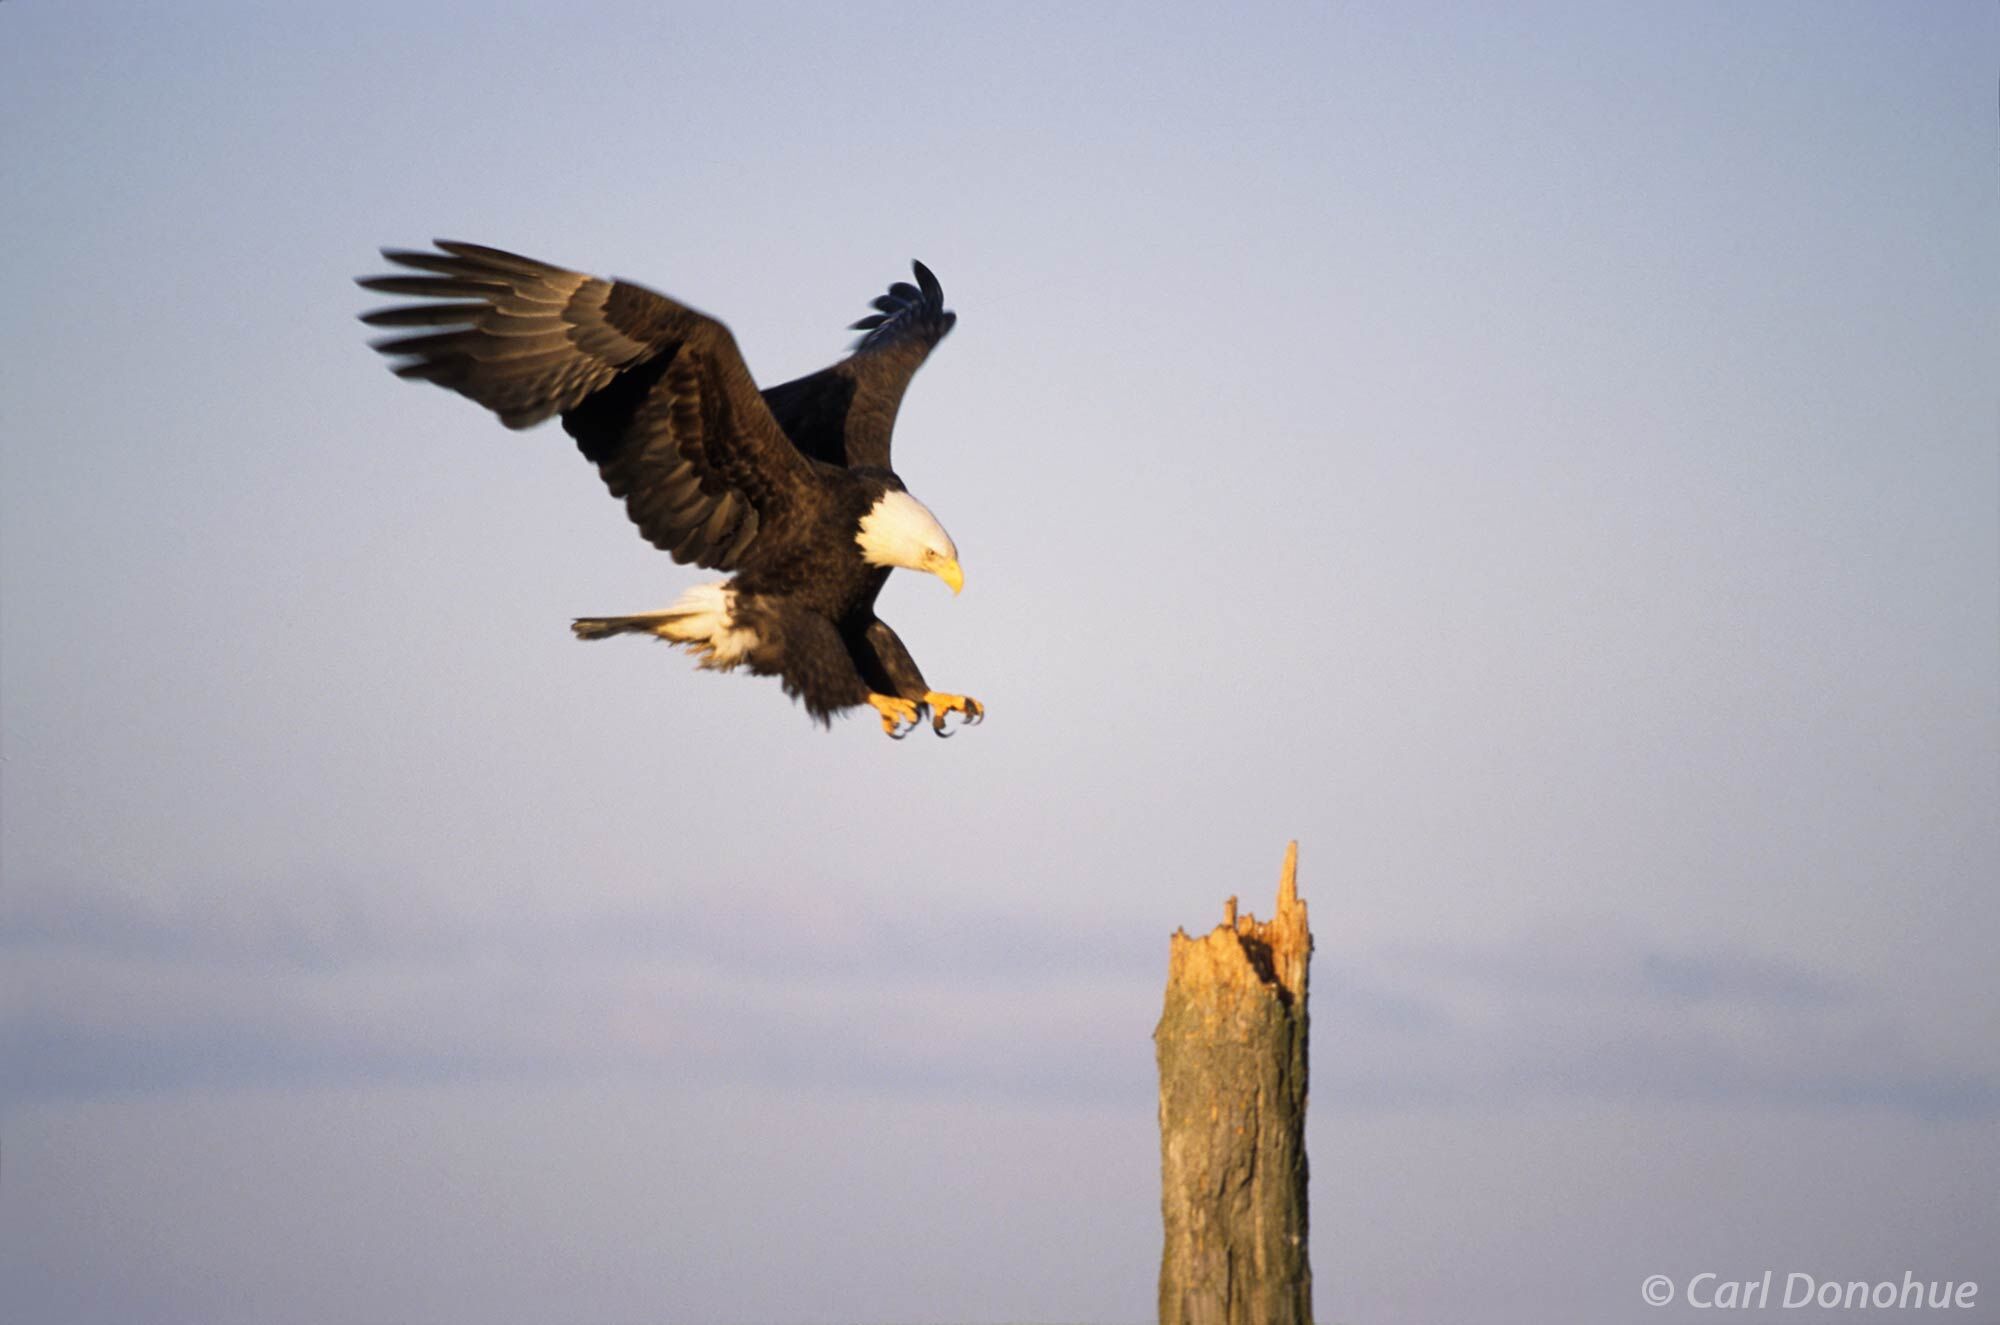 Bald Eagle in flight, coming in for a landing on a stump, Homer, Alaska. Bald eagle fishing in Kachemak Bay, near Homer, Alaska...